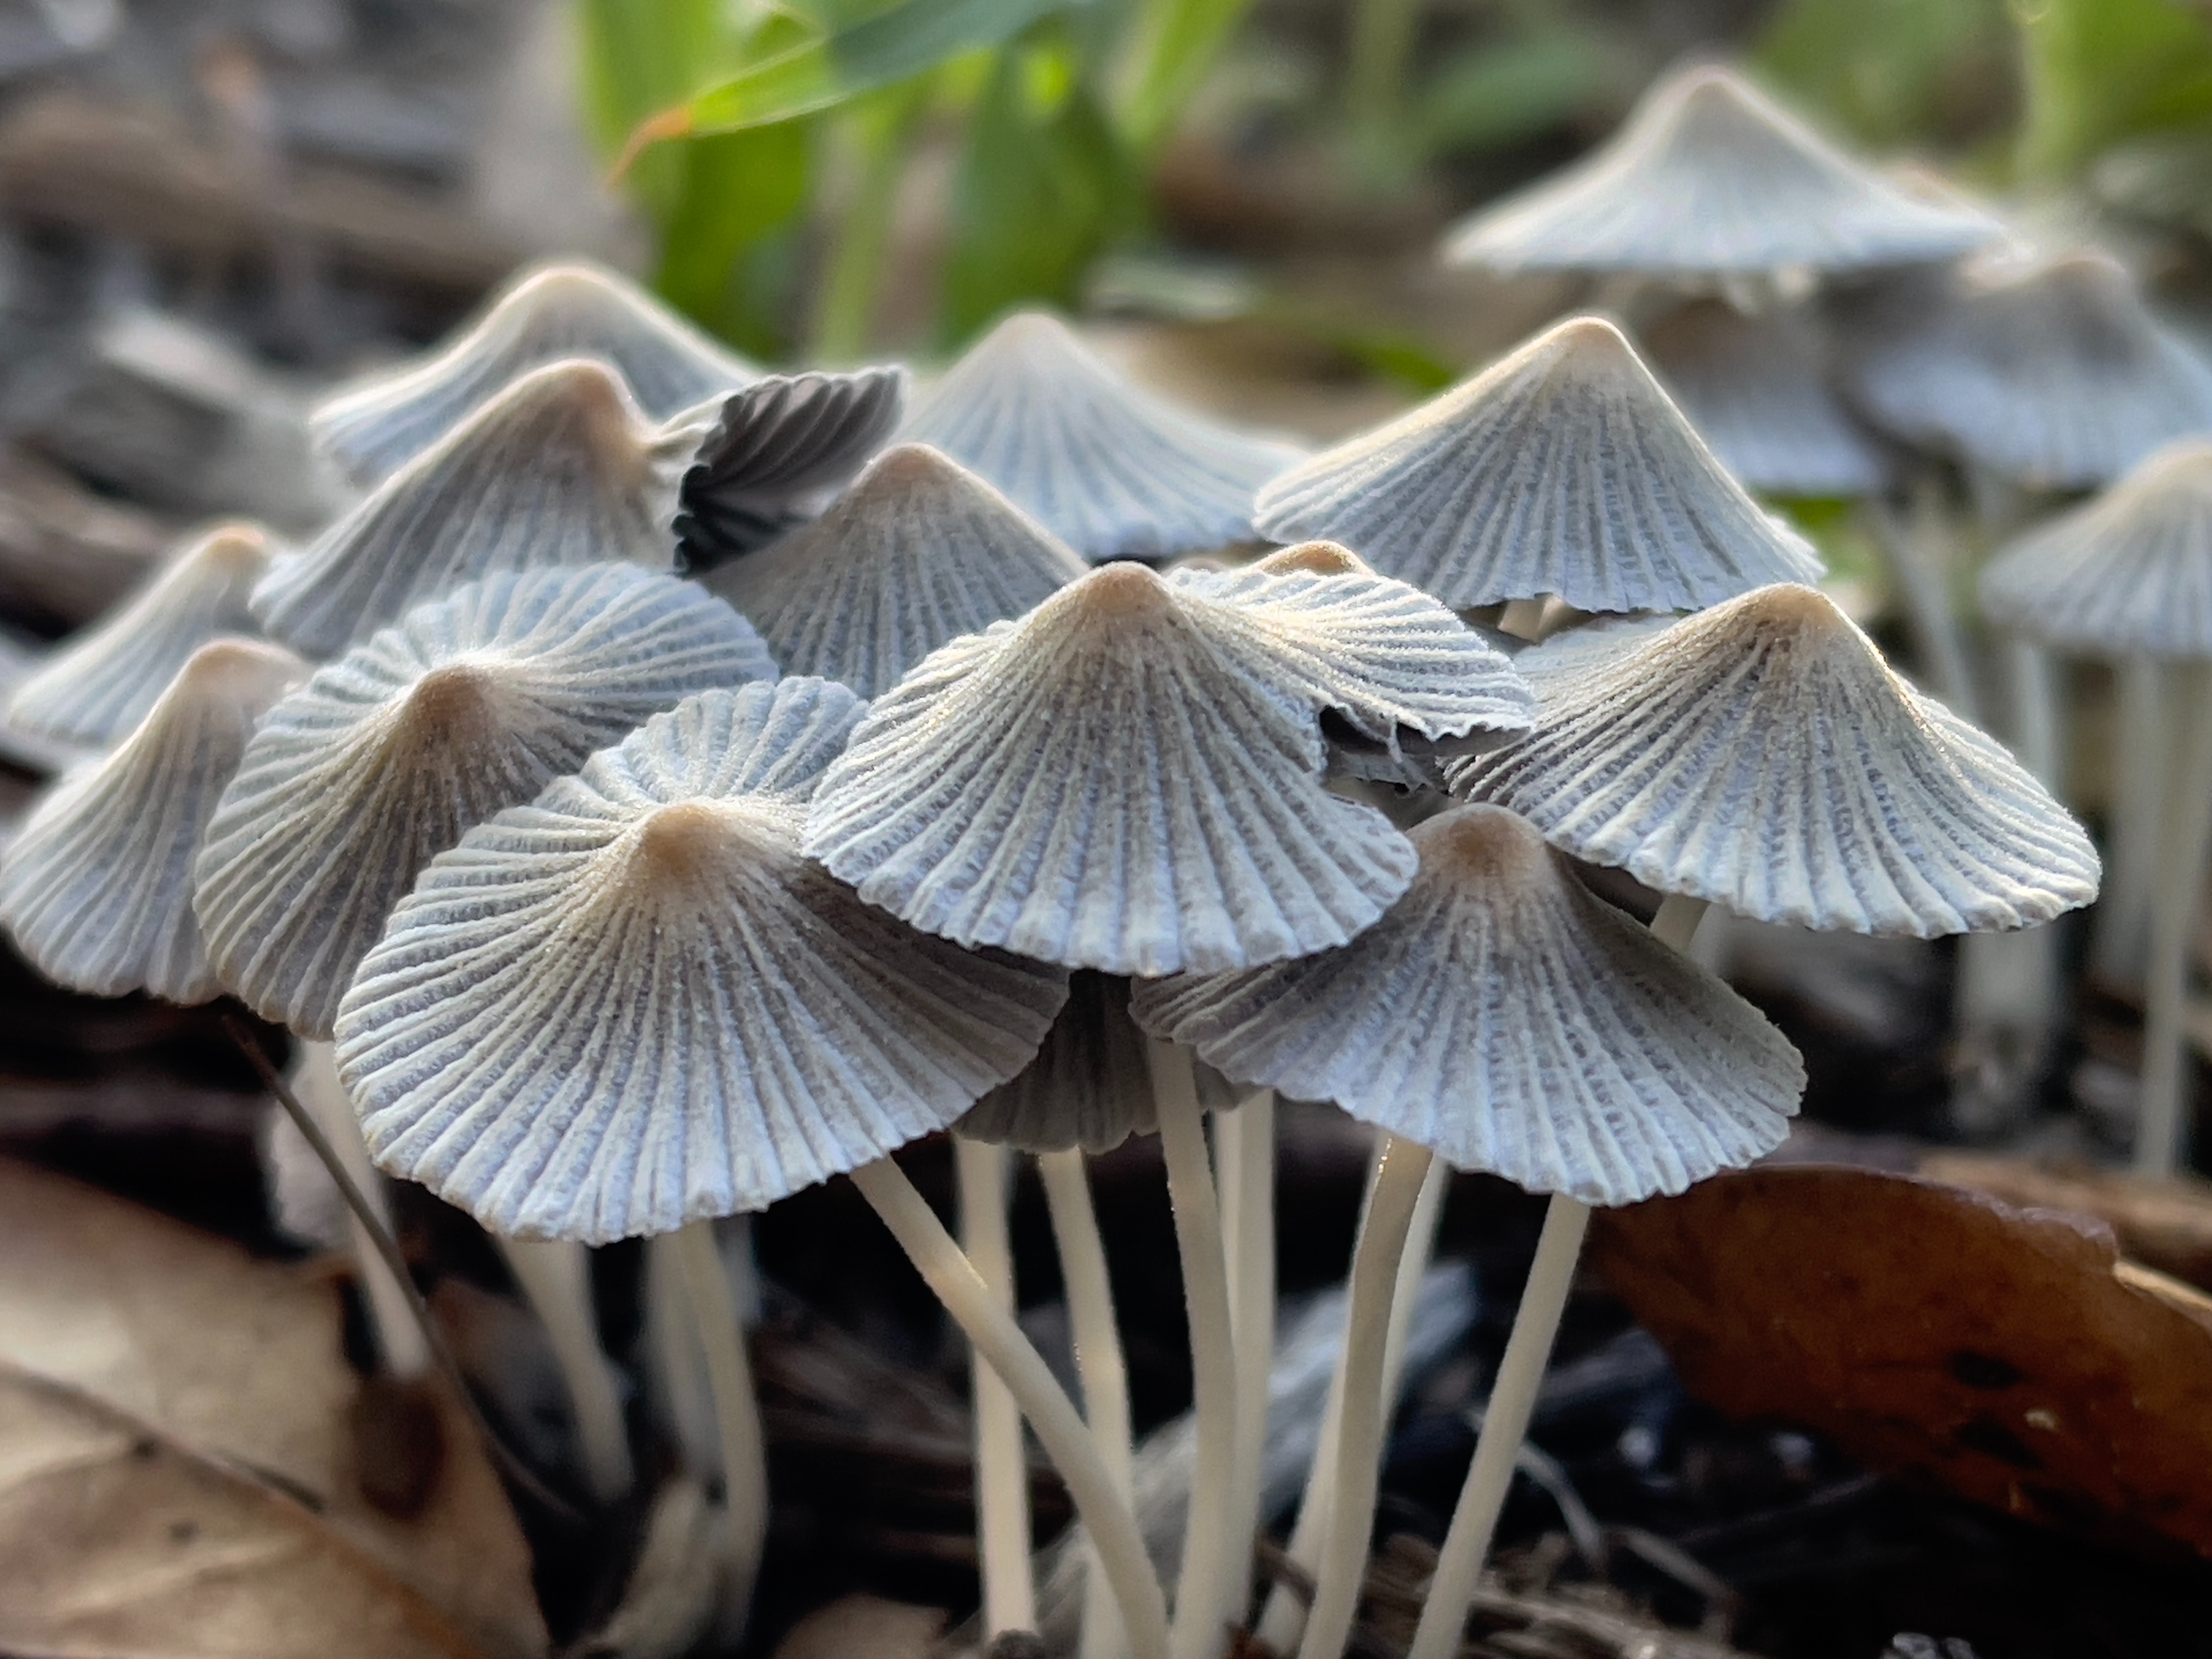 Medicinal mushroom supplements